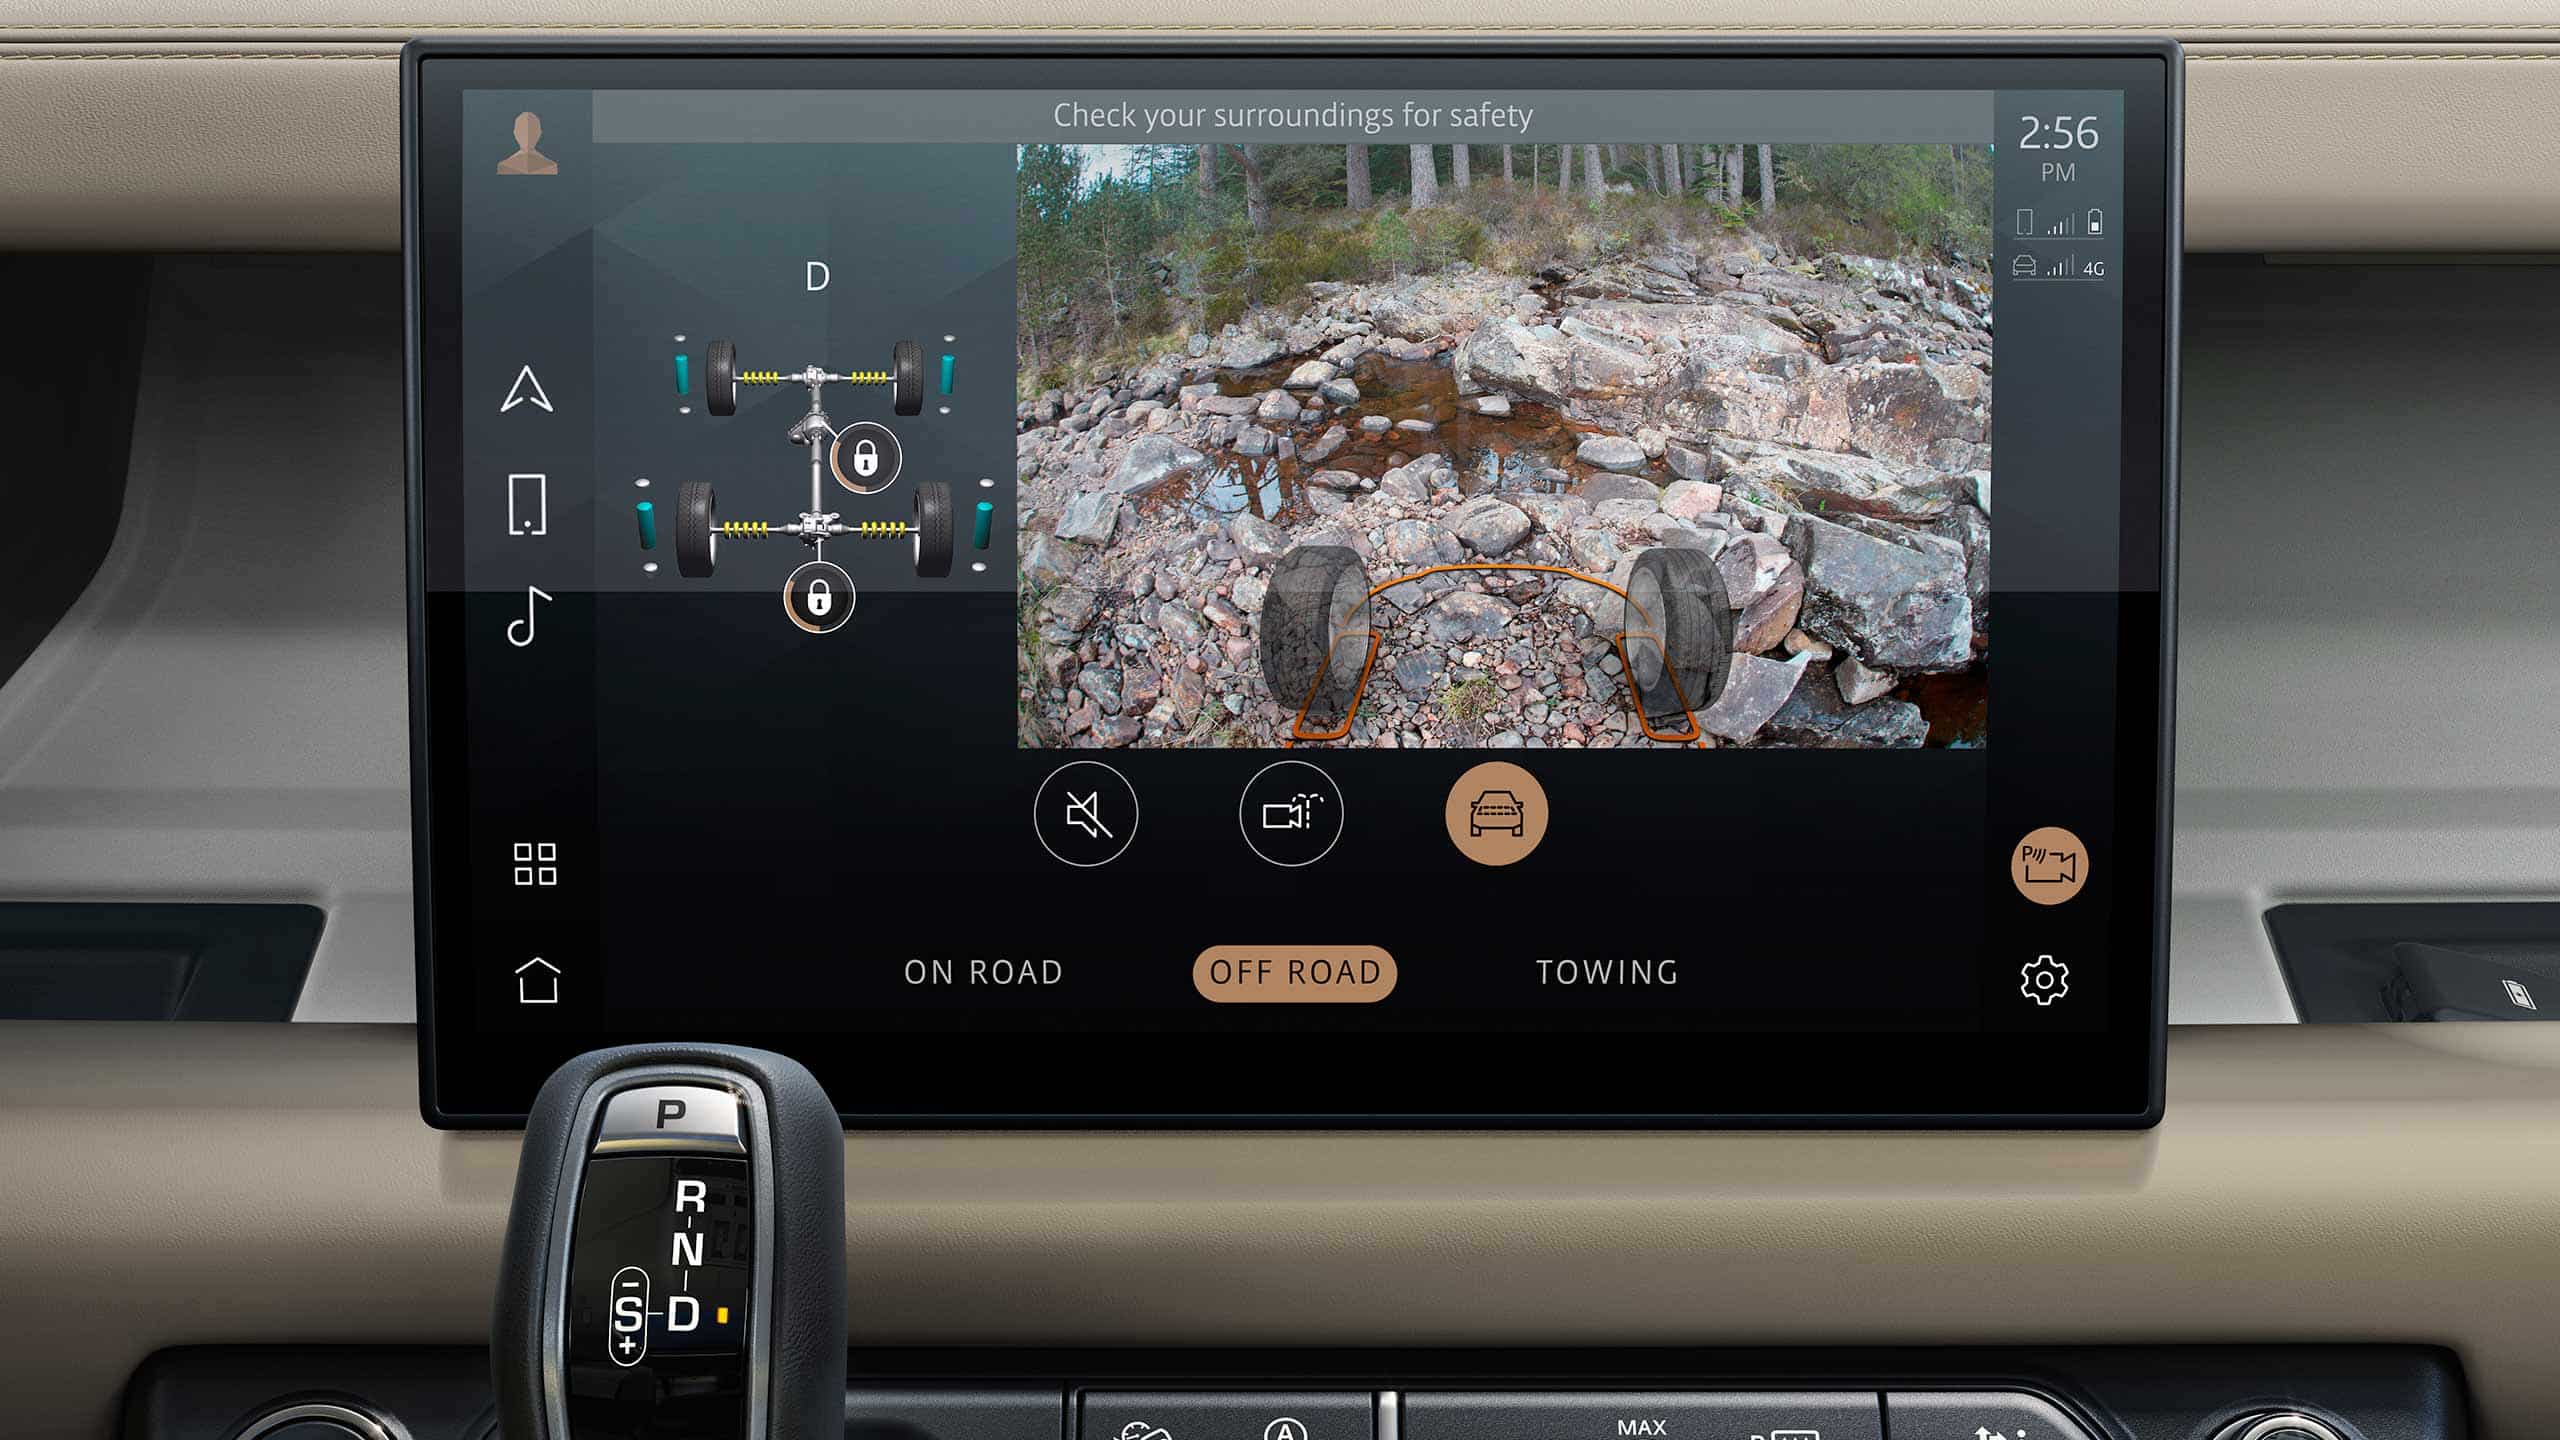 Range Rover Defender camera system